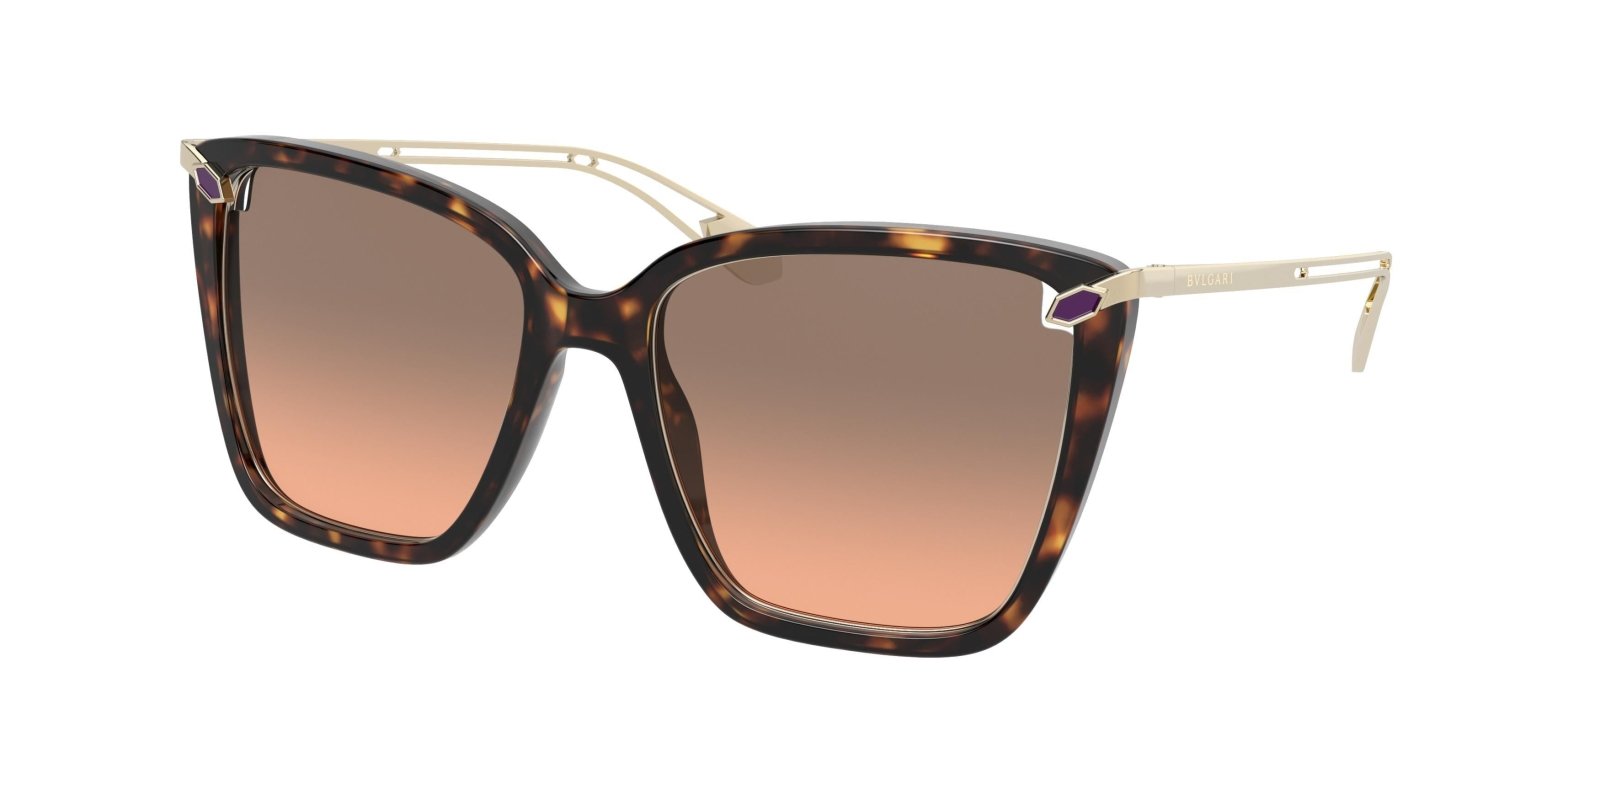 Designer Sunglasses For Women On Sale | The RealReal